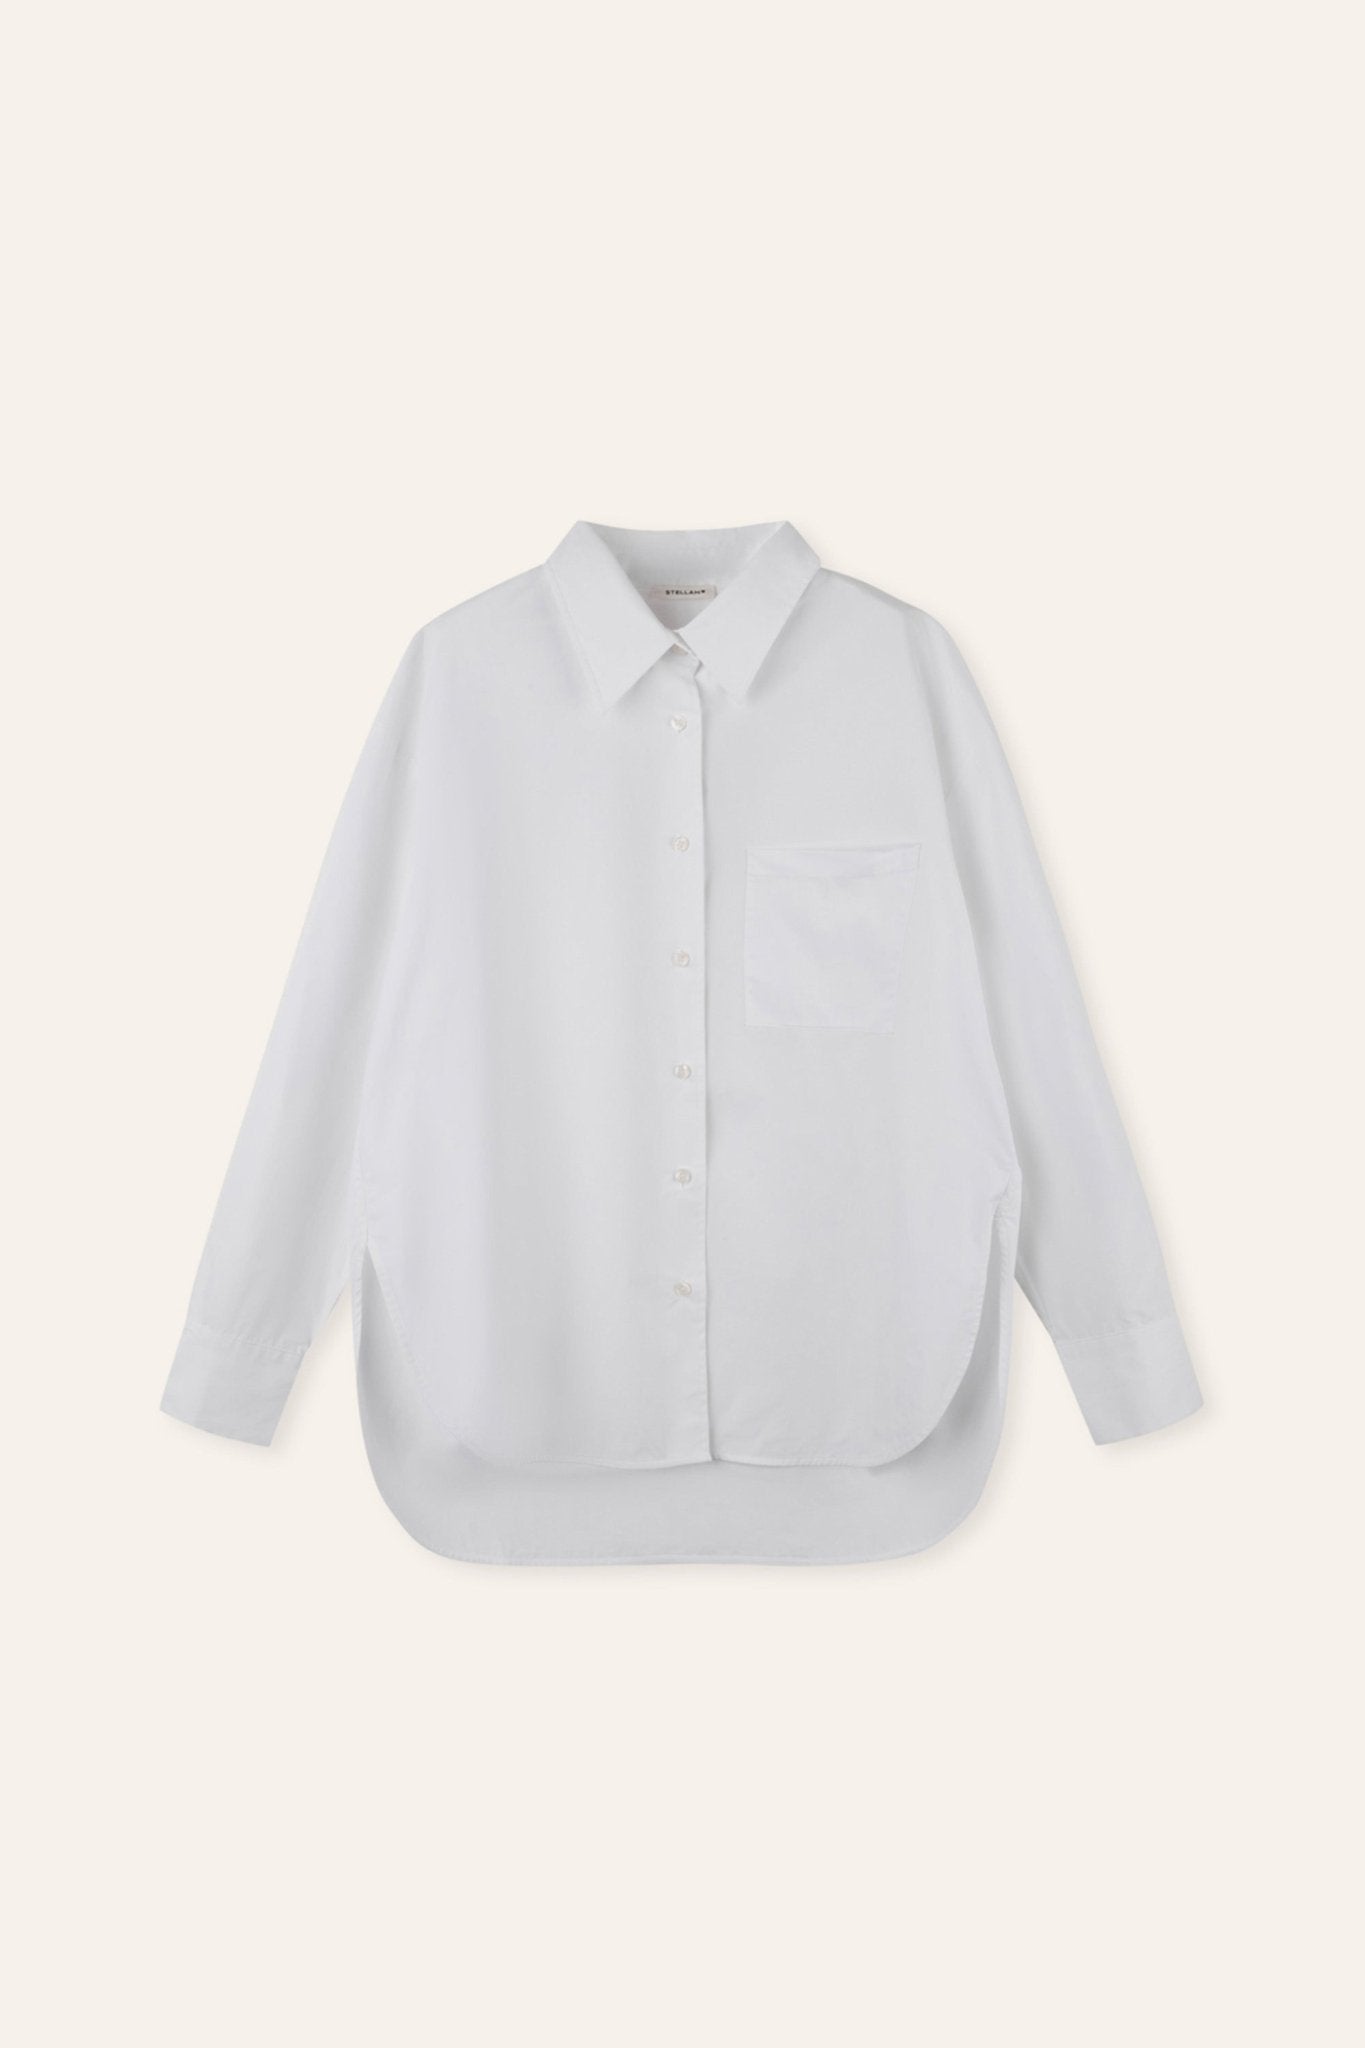 LUI oversized cotton shirt (White) - STELLAM